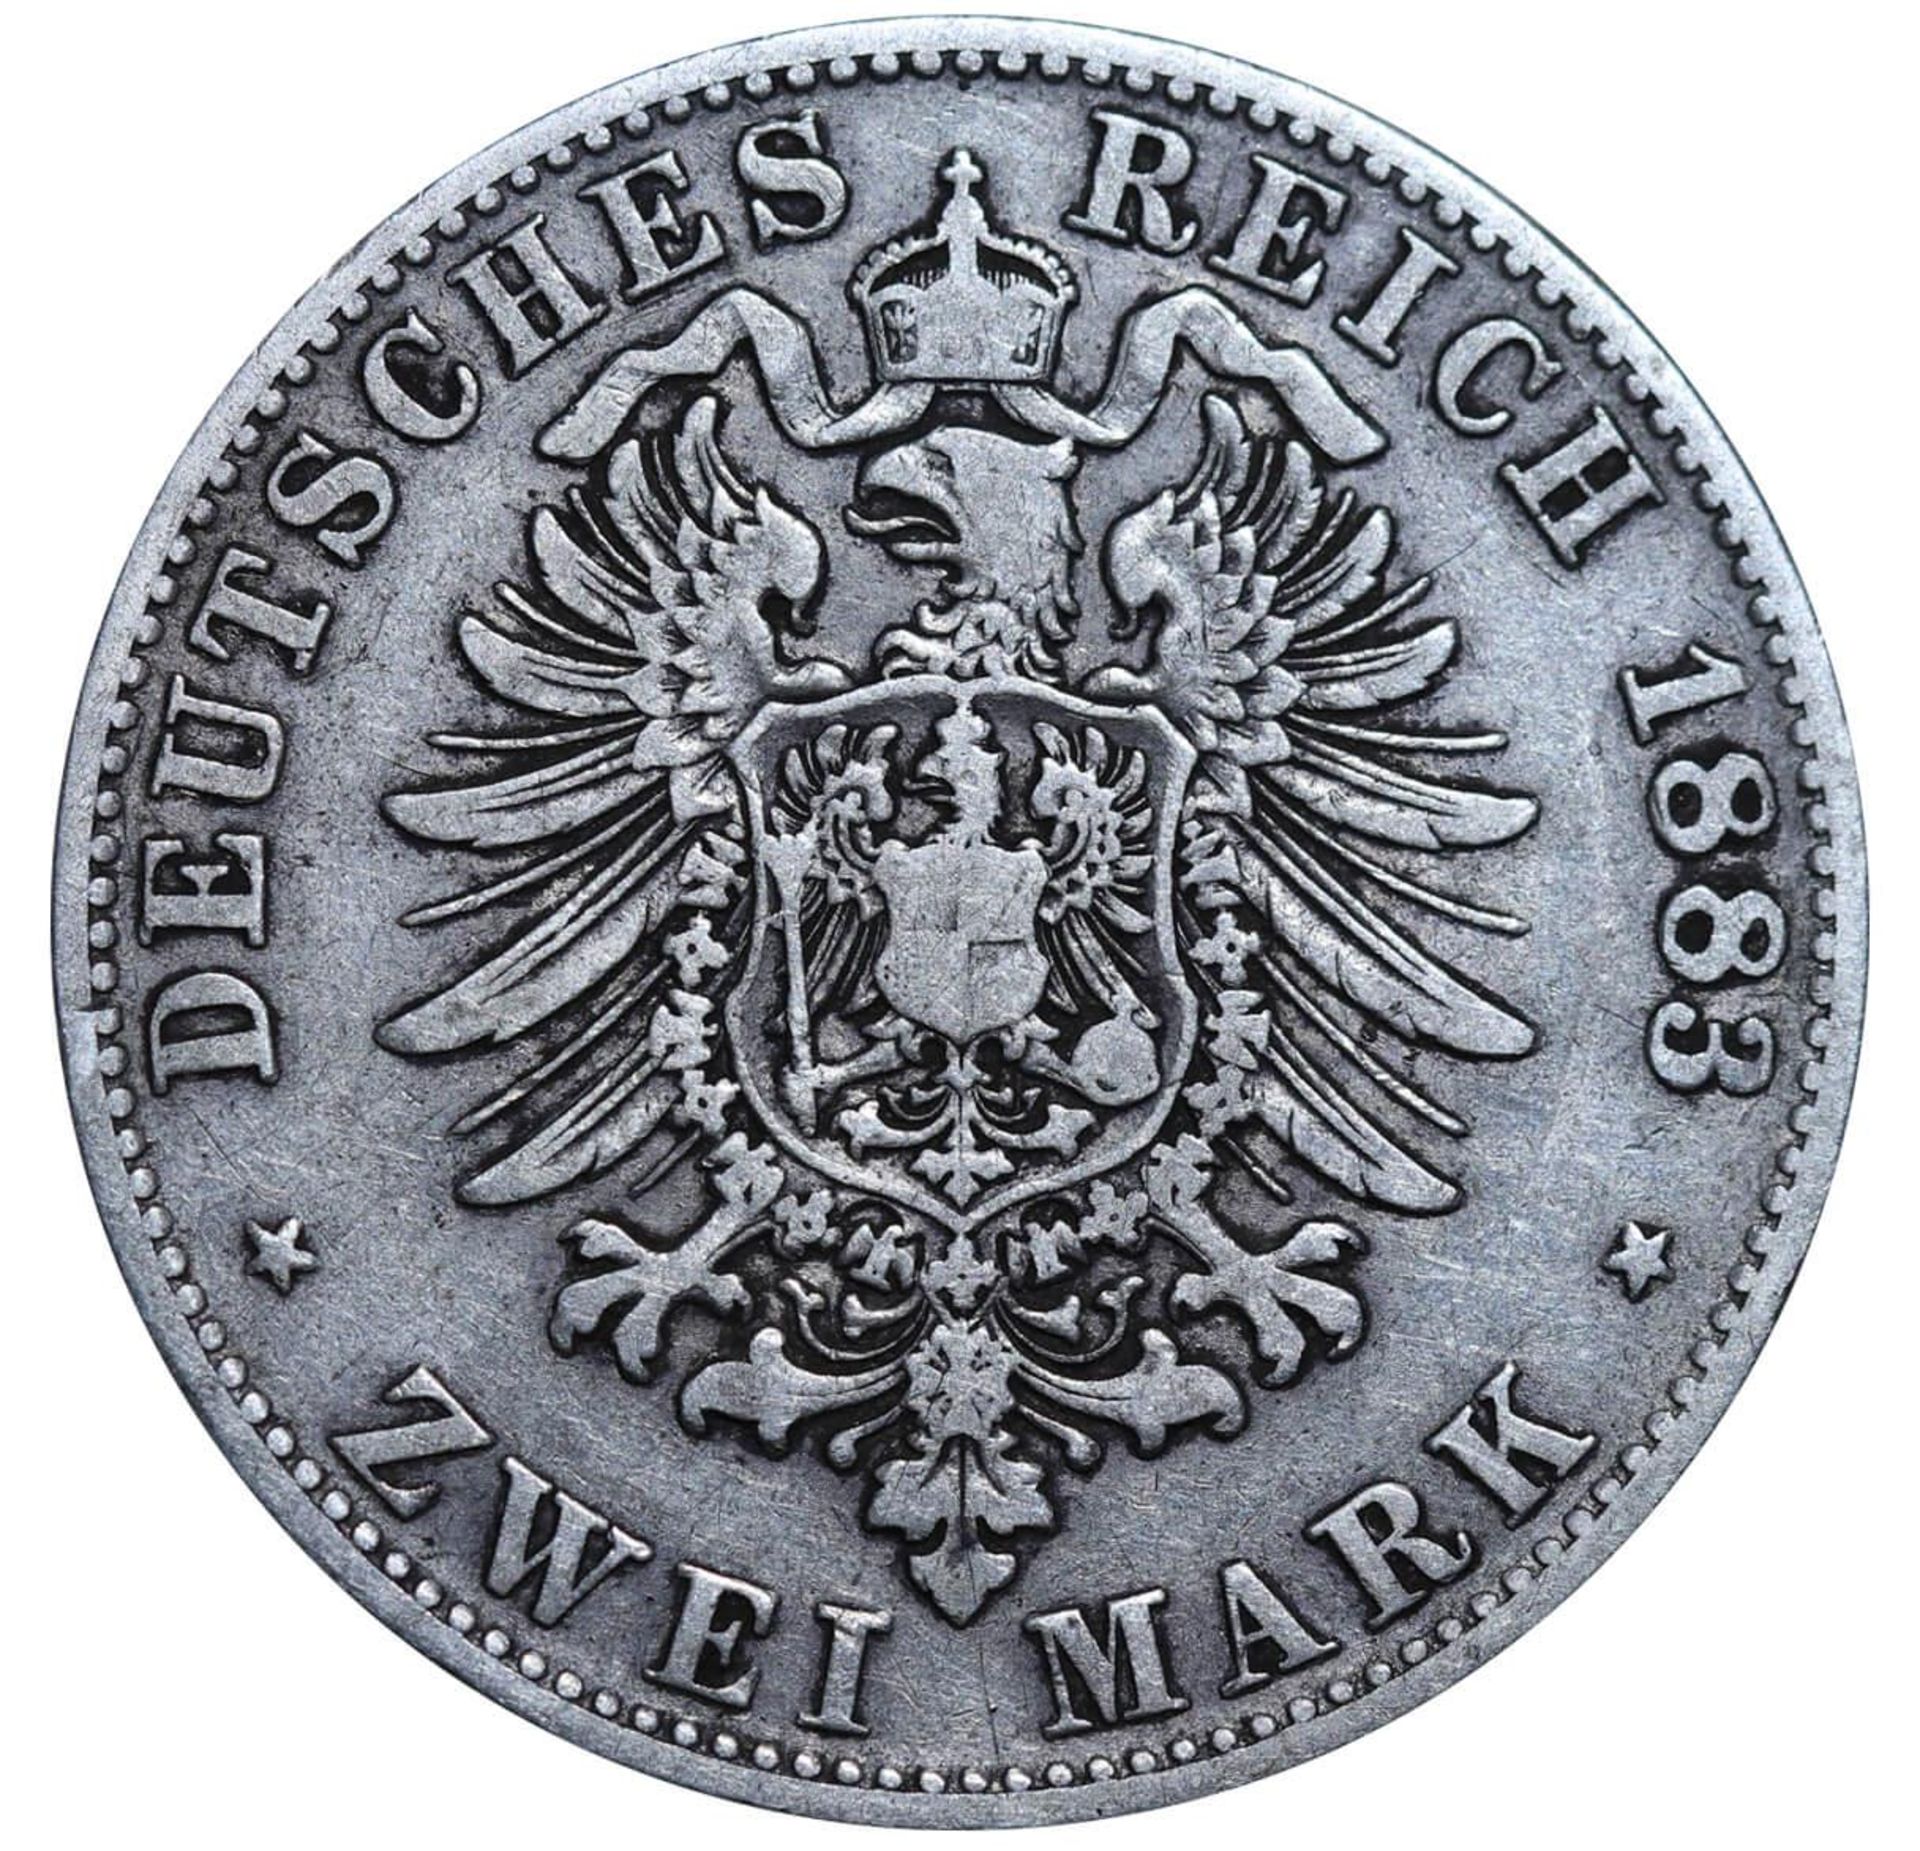 Kingdom of Bavaria, 2 Marks, 1883 year, D - Image 3 of 3